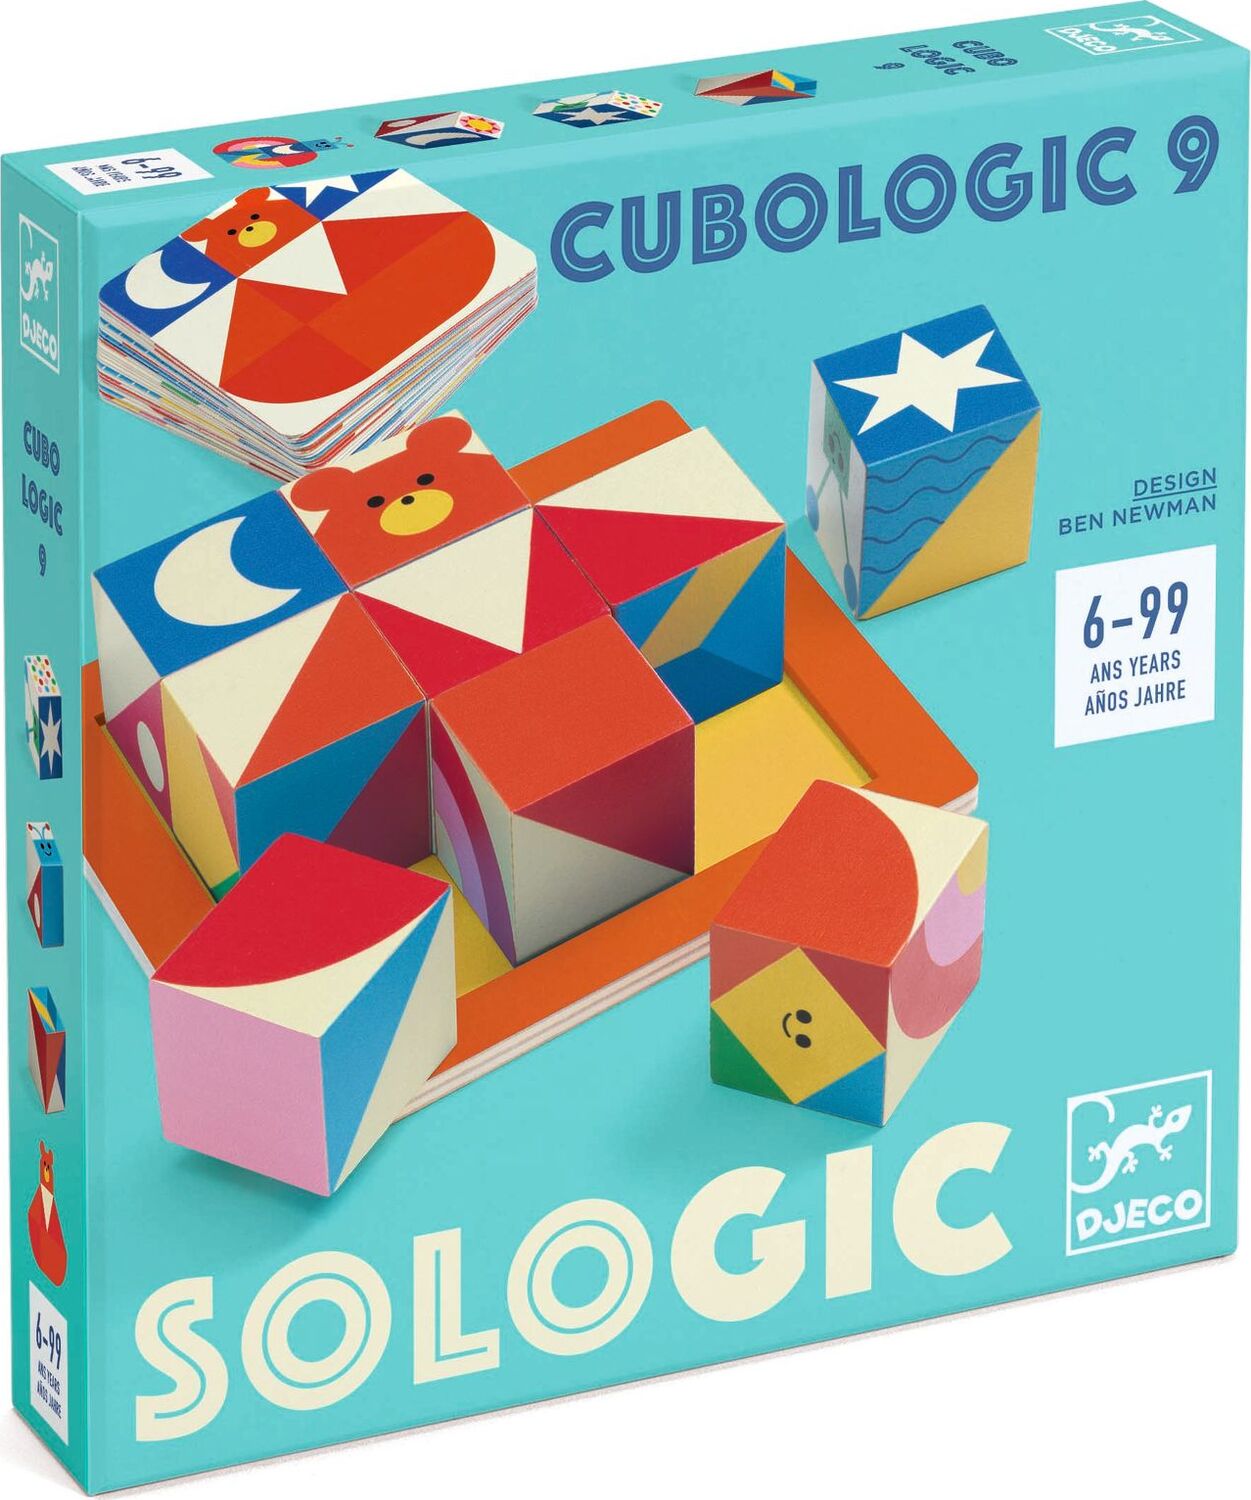 Cubologic 9 Sologic